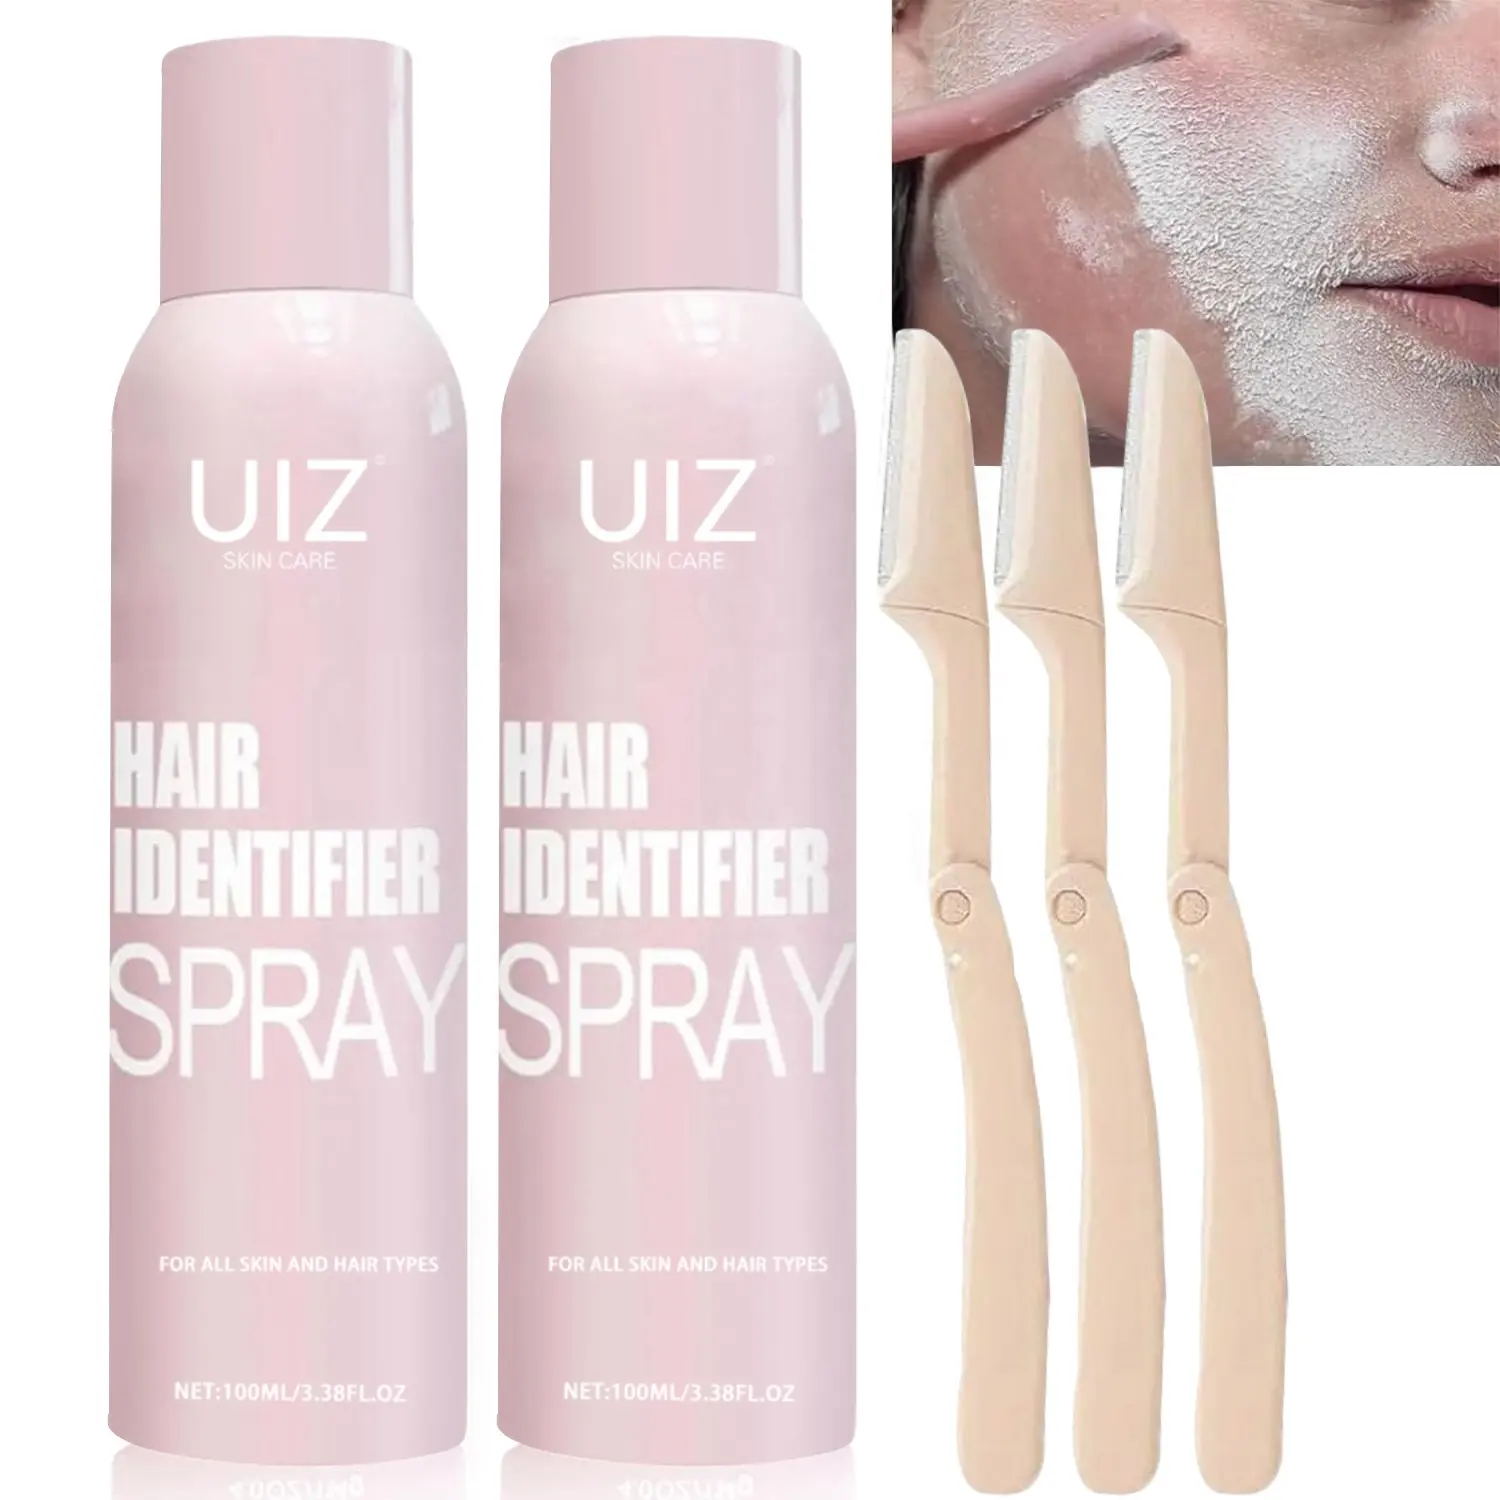 Hair Identifier Spray Face Body Shaving Facial Hair Smooth Cooling Skin Protection Hair Removal Dermabrasion Powder Spray